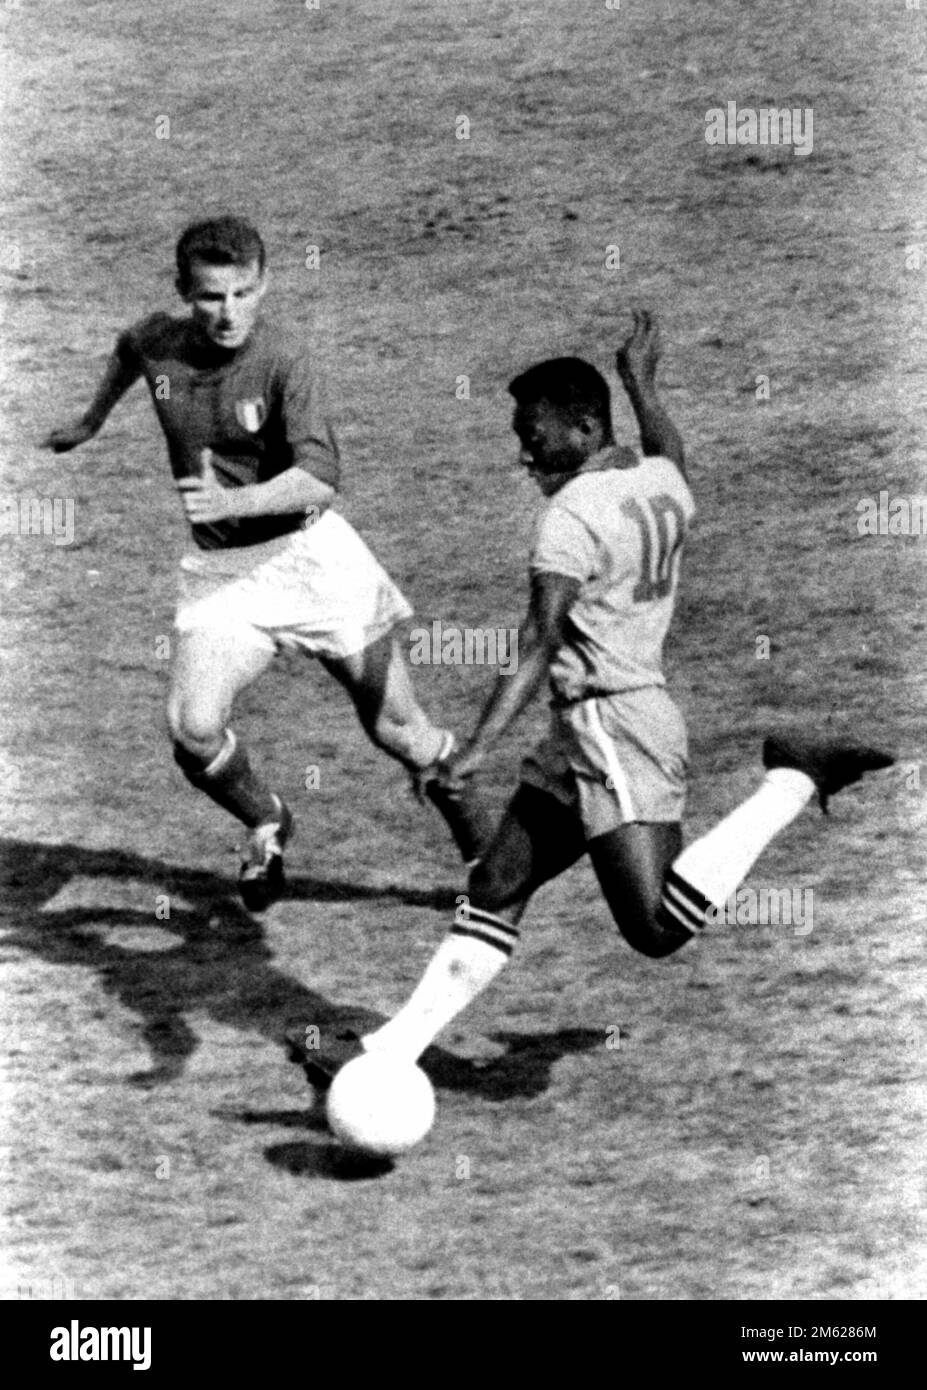 Italien gegen Brasilien, 12. Mai 1963 - Trapattoni und Pelé - Mailand, San Siro, 12. Mai 1963. Italien - Brasilien 3-0, Freundschaftsspiel Stockfoto